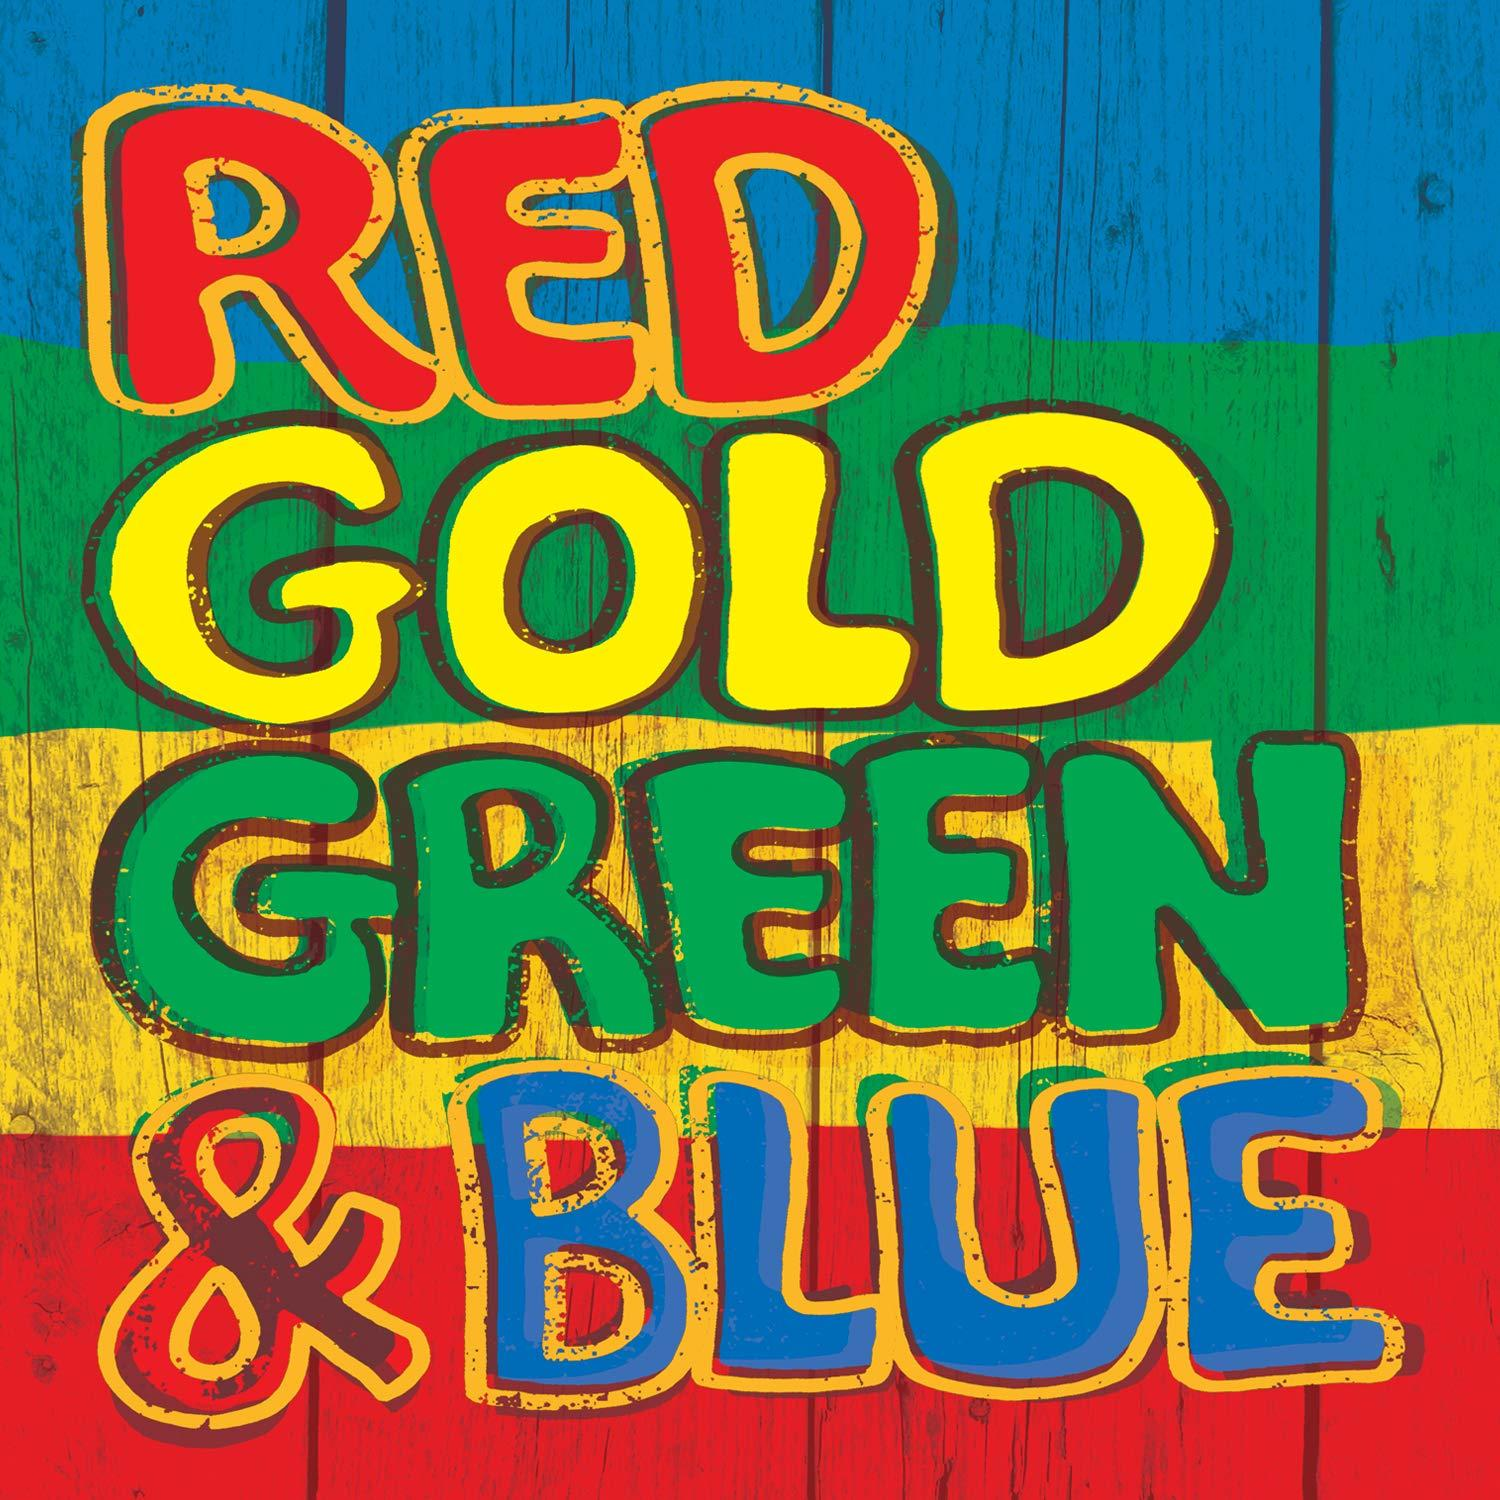 VARIOUS - Red & (Vinyl) Gold Blue - Green